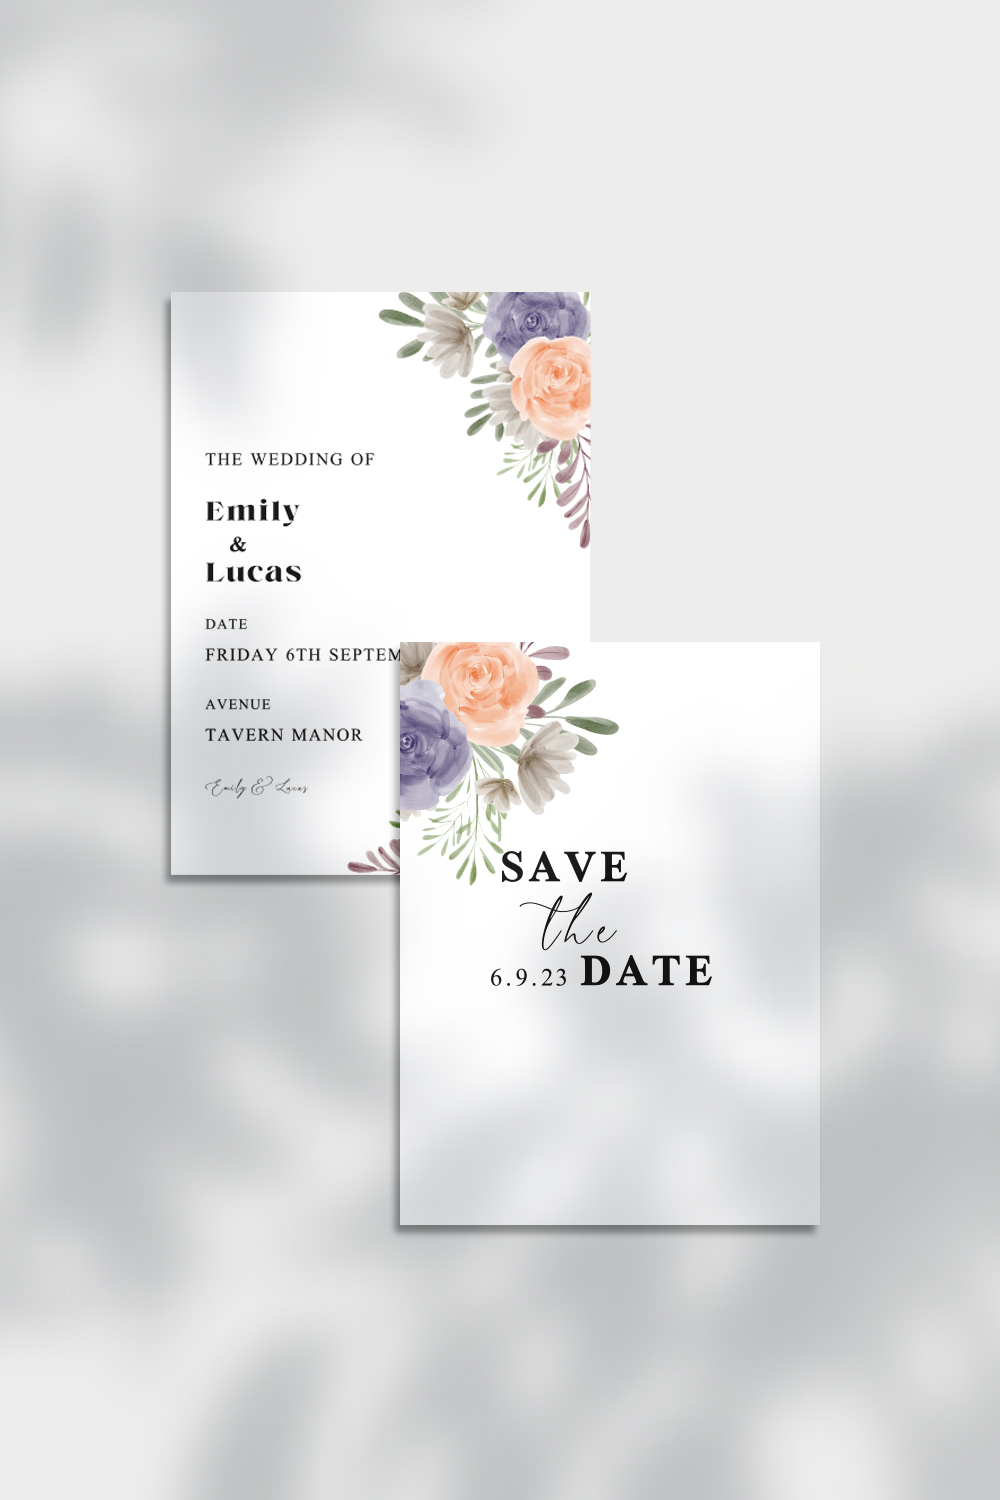 New Wedding Invitation Design Templates pinterest preview image.